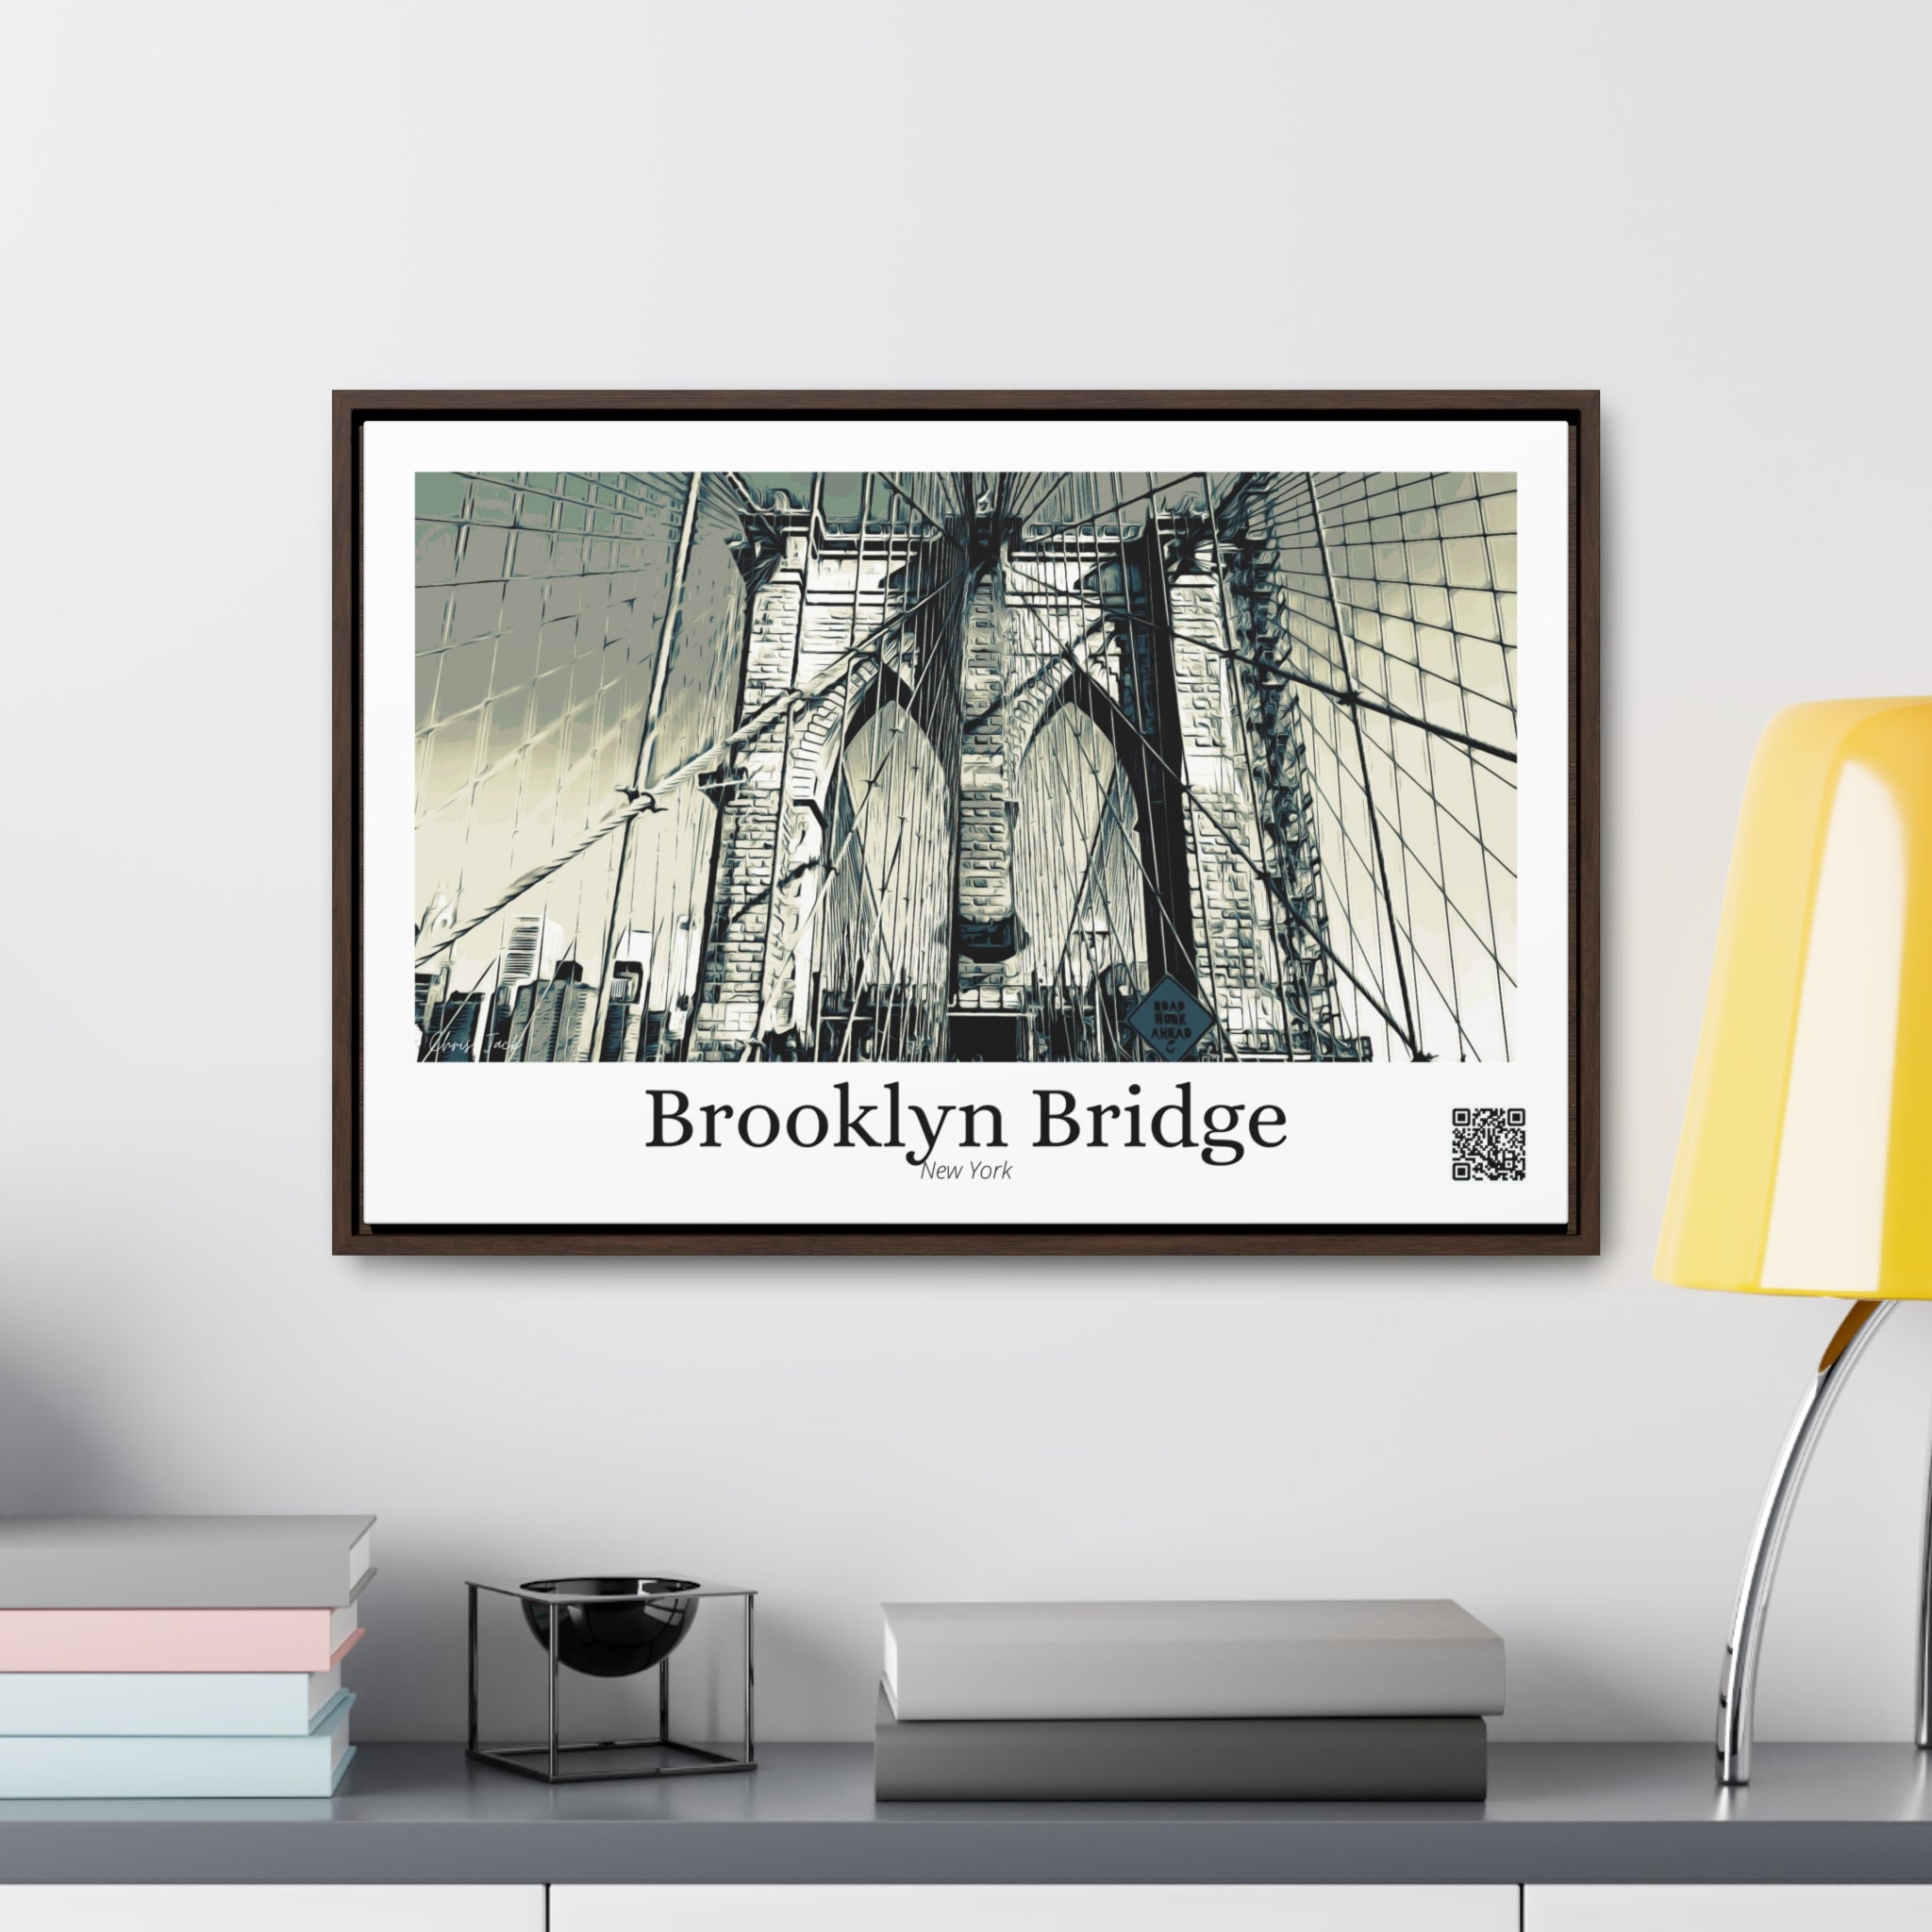 Brooklyn's Backbone: A Pillar's Tale